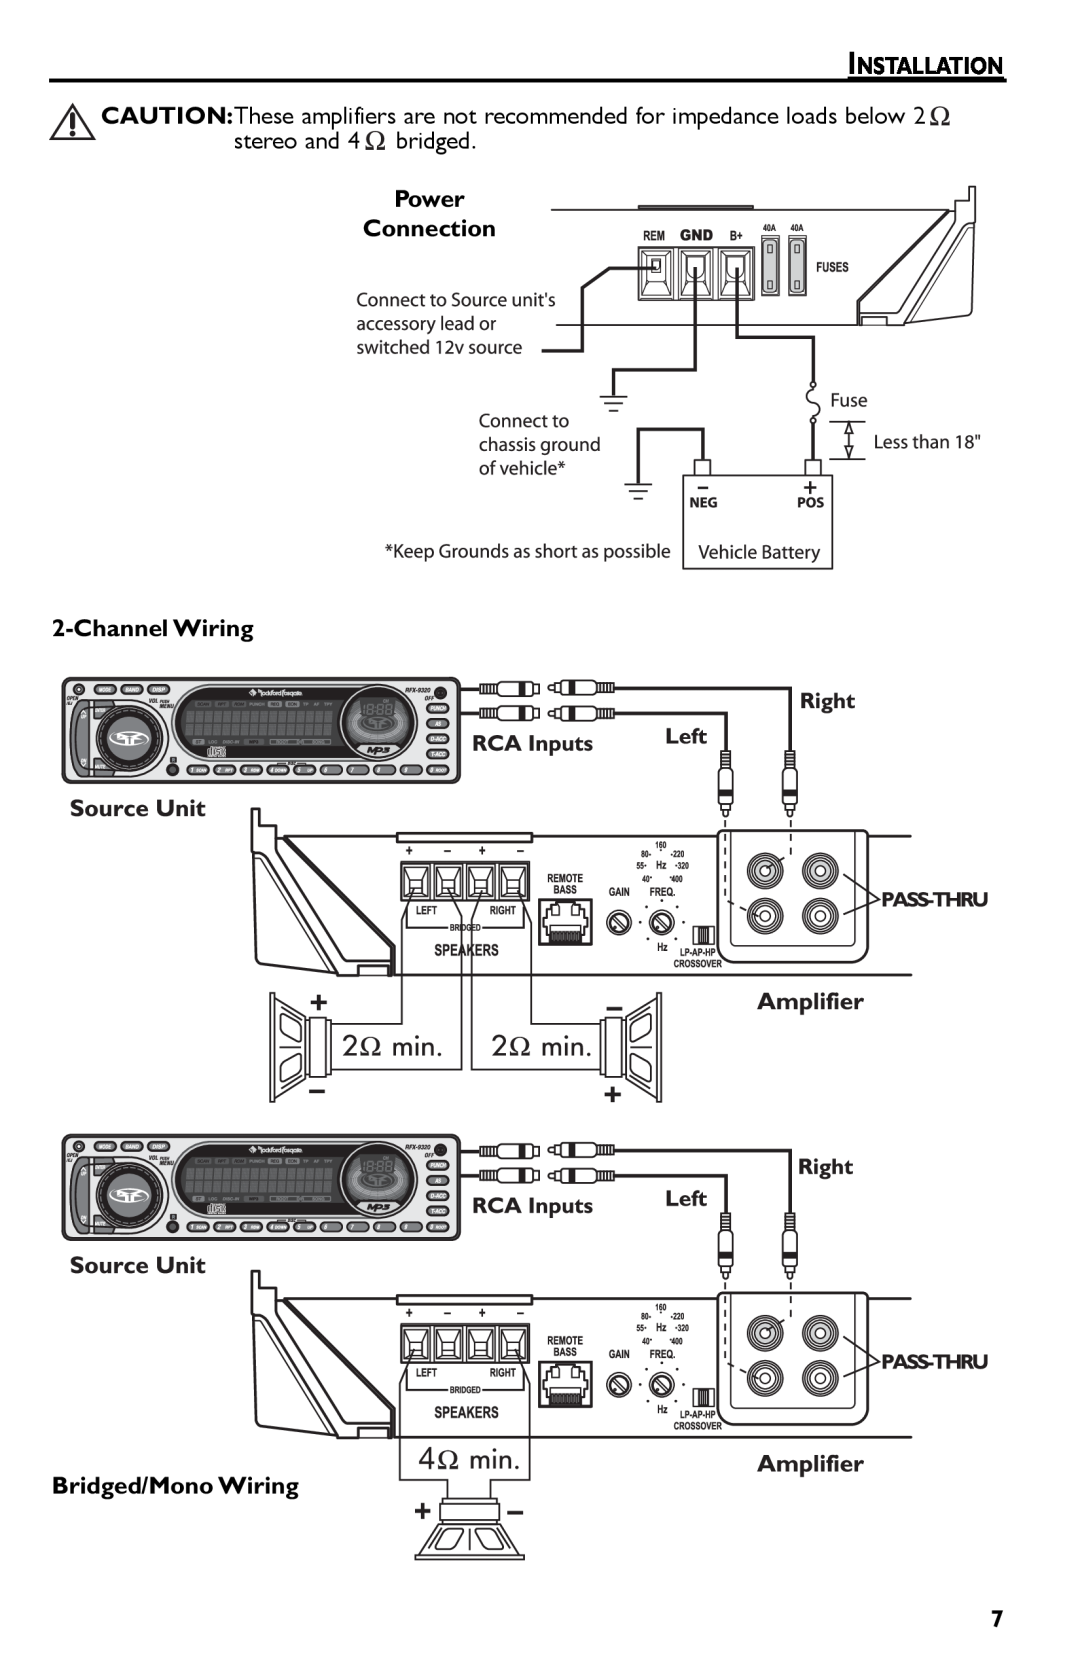 Rockford Fosgate Punch 45 manual Installation, Power Connection 2-ChannelWiring, Bridged/Mono Wiring 